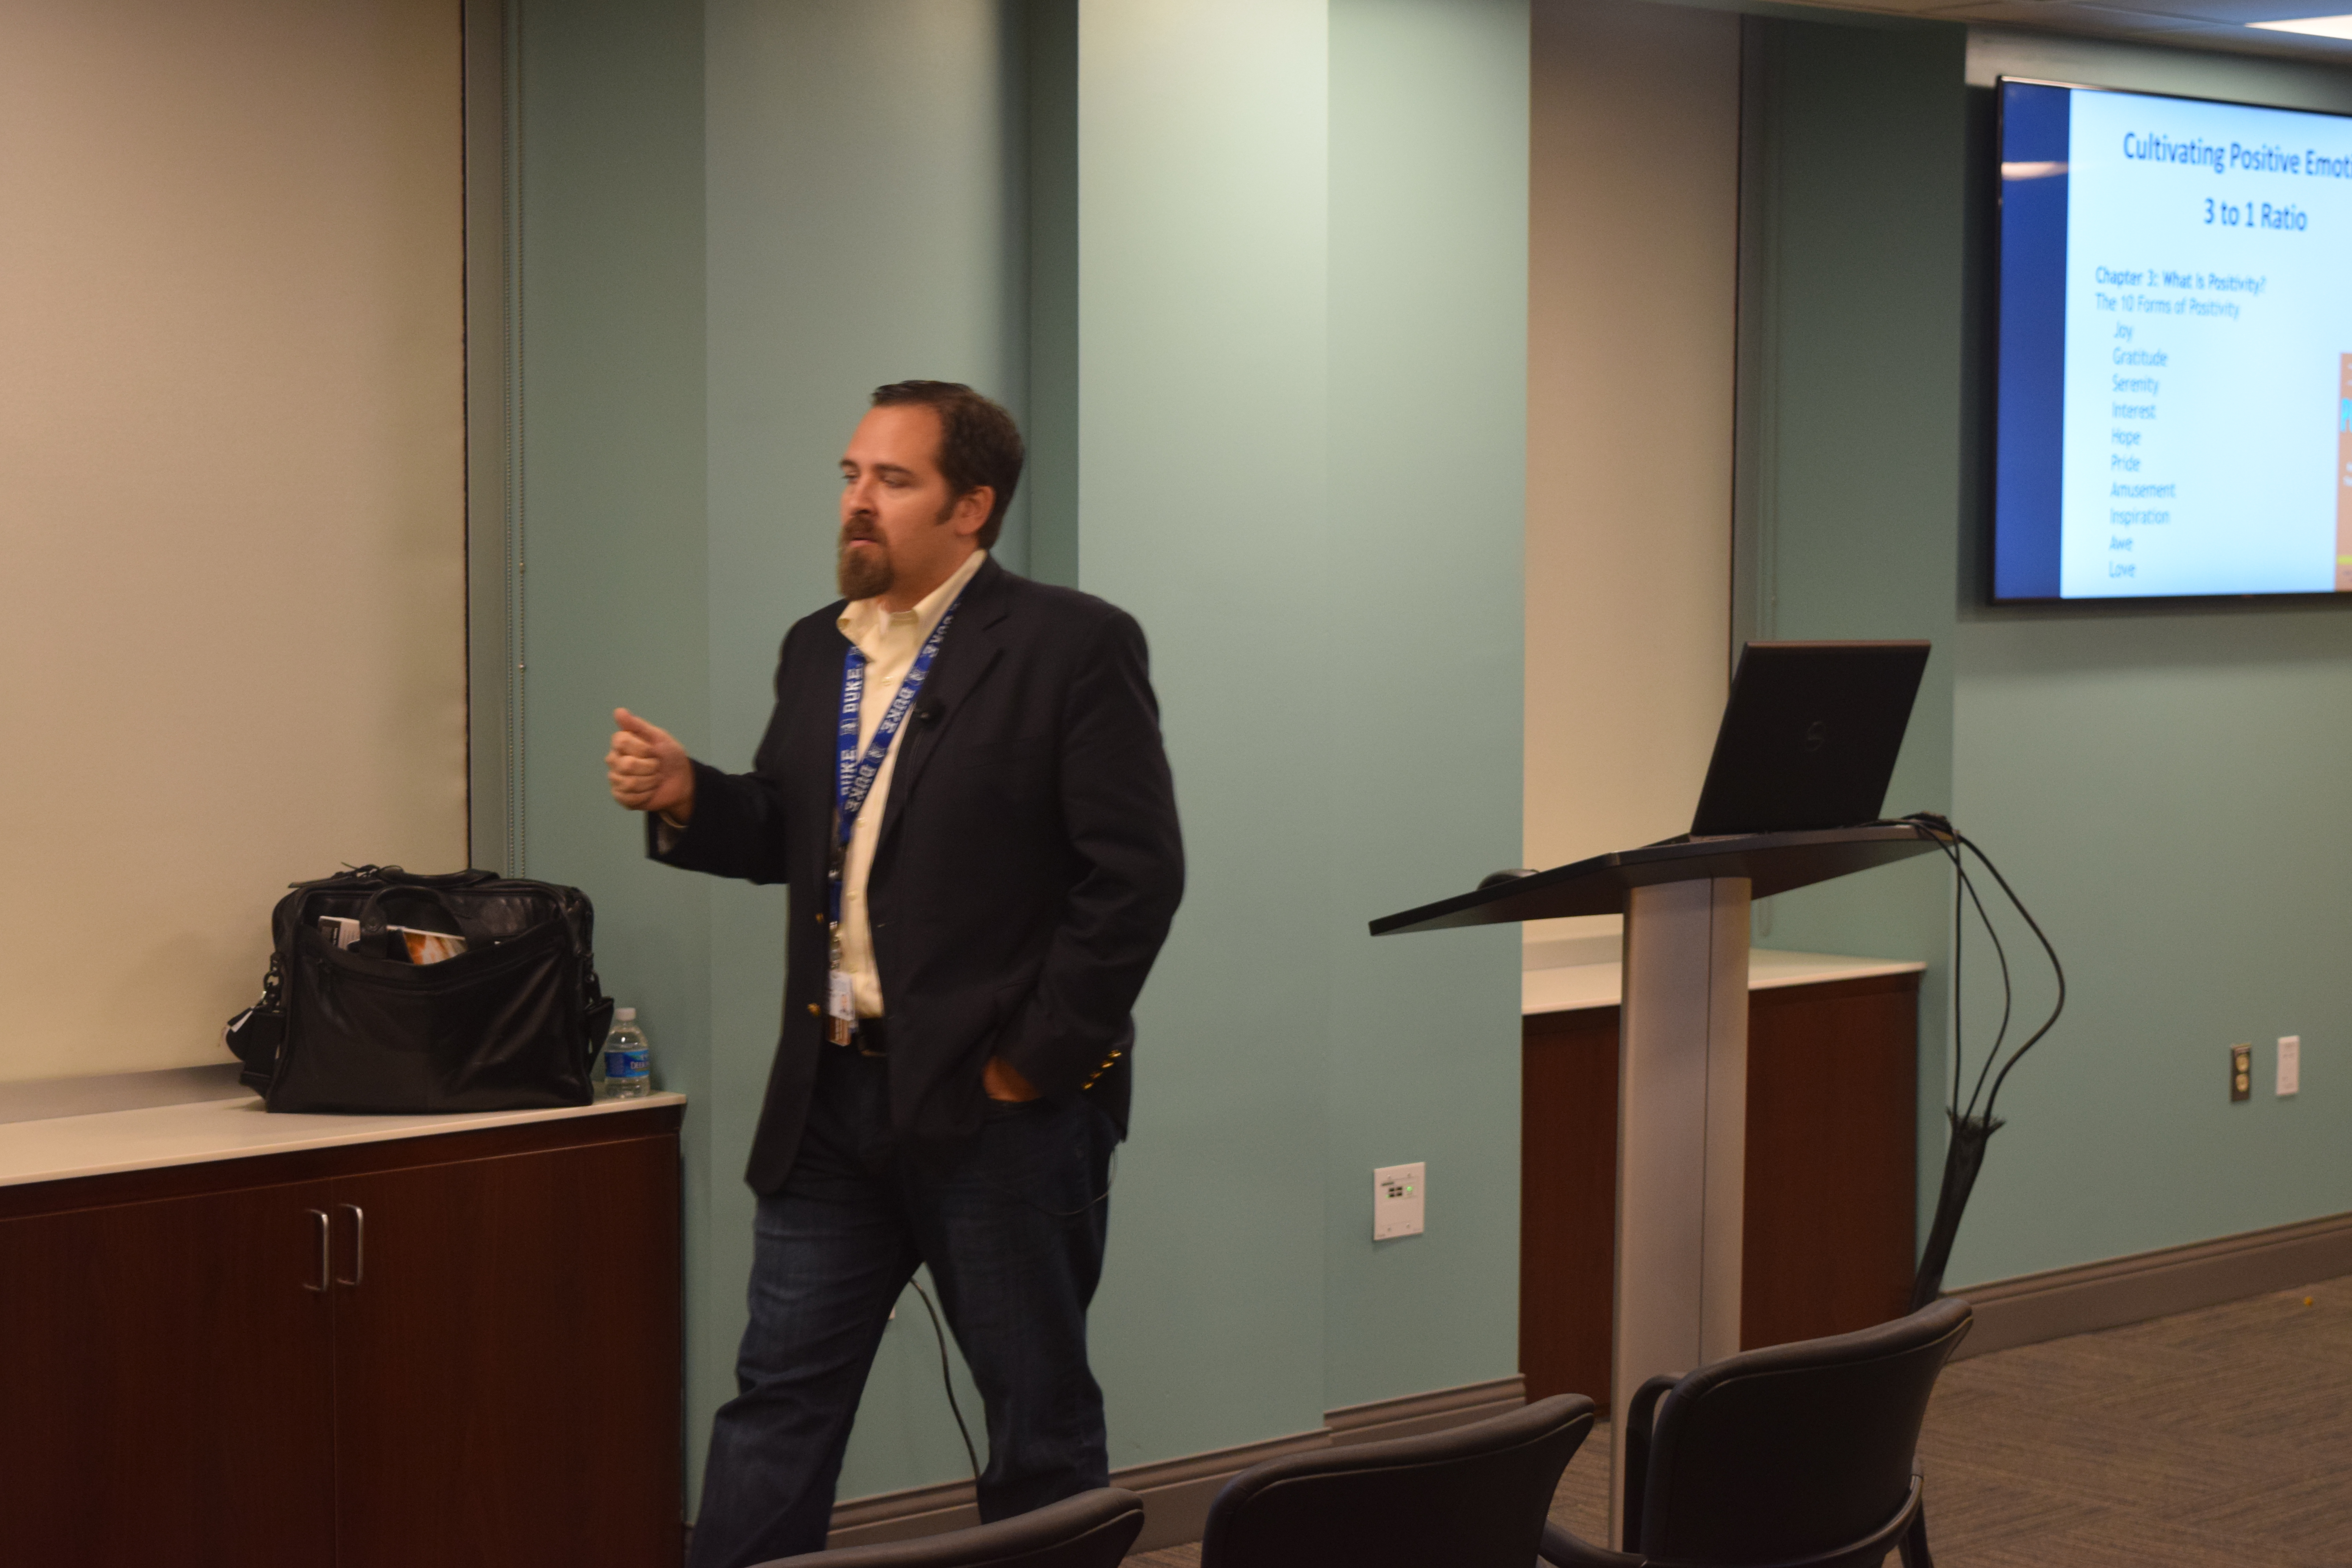  J. Bryan Sexton, PhD, Director of Duke Patient Safety Center presents 